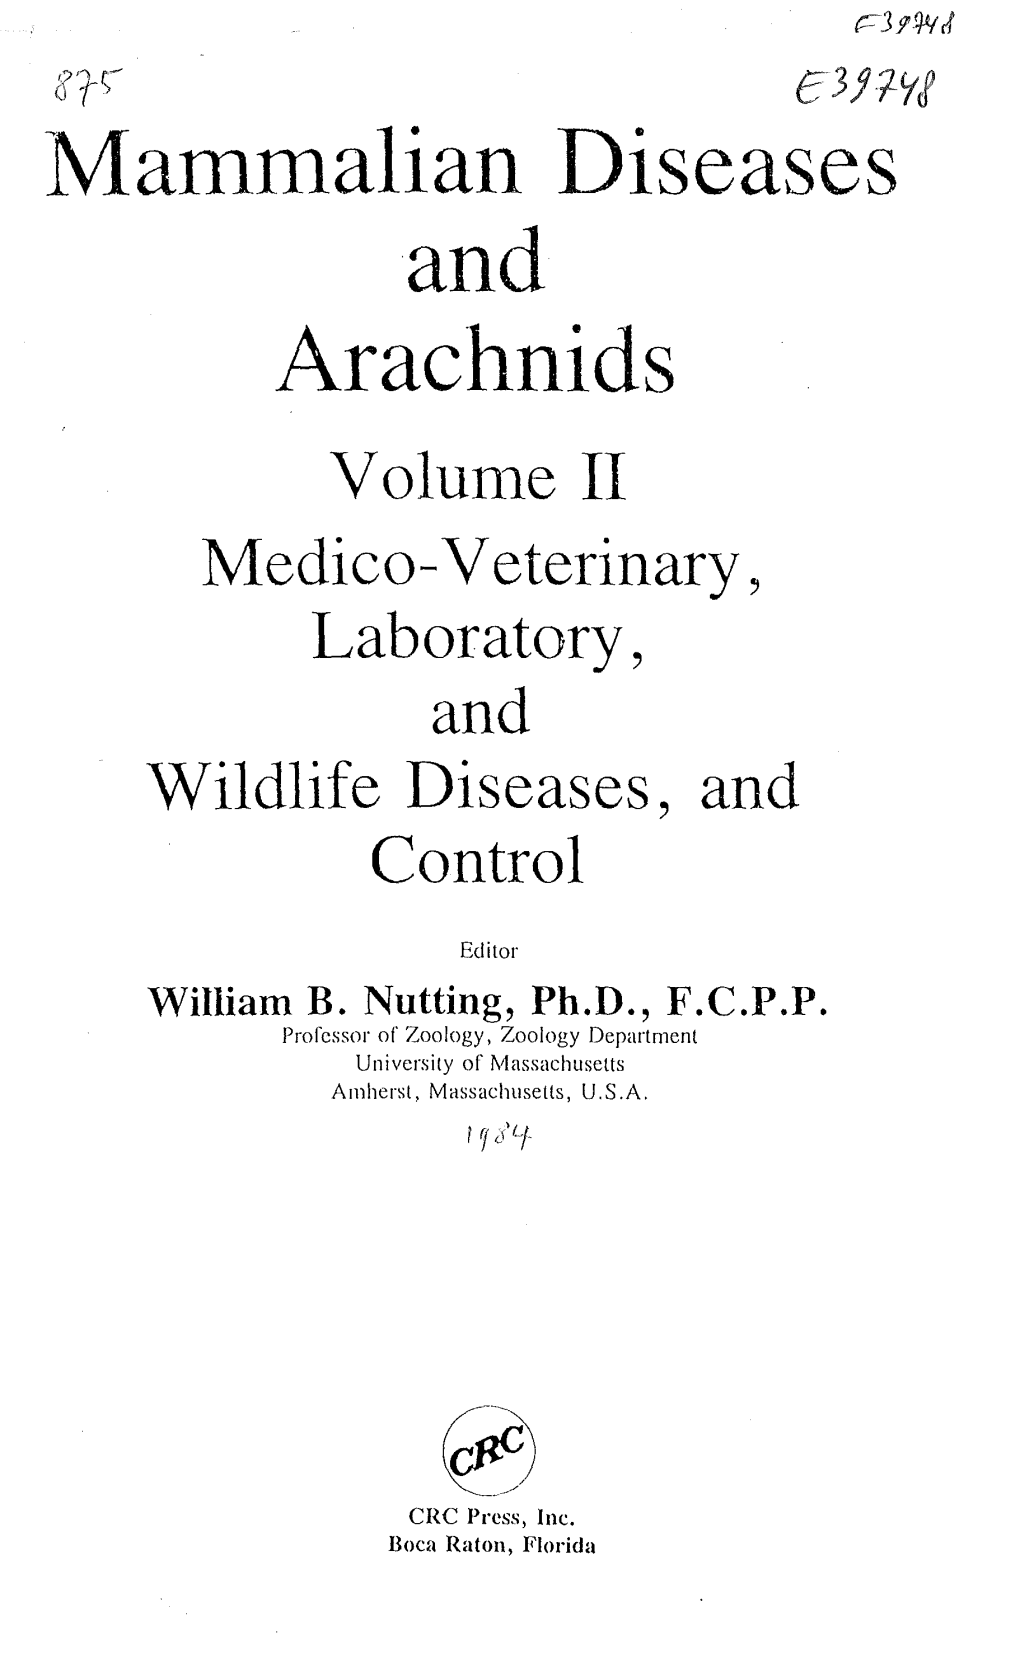 Mammalian Diseases and Arachnids Volull1e 11 Medico-Veterinary, Laboratory, and Wildlife Diseases, and Control